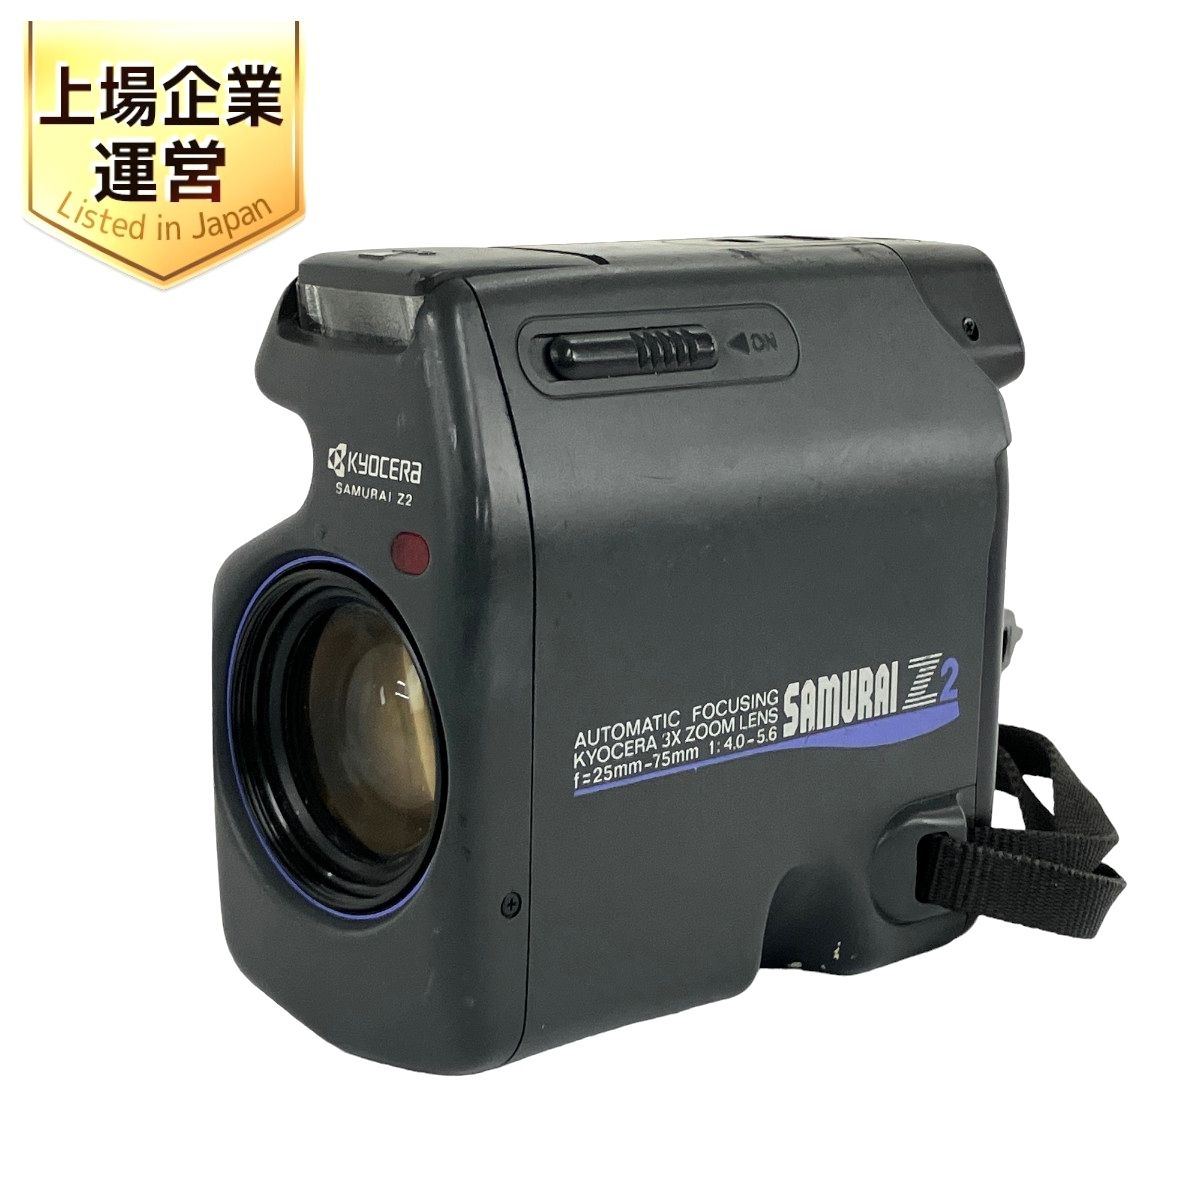 KYOCERA SAMURAI Z2 25-75mm 1:4.0-5.6 コンパクトフィルムカメラ ジャンク Y9043801